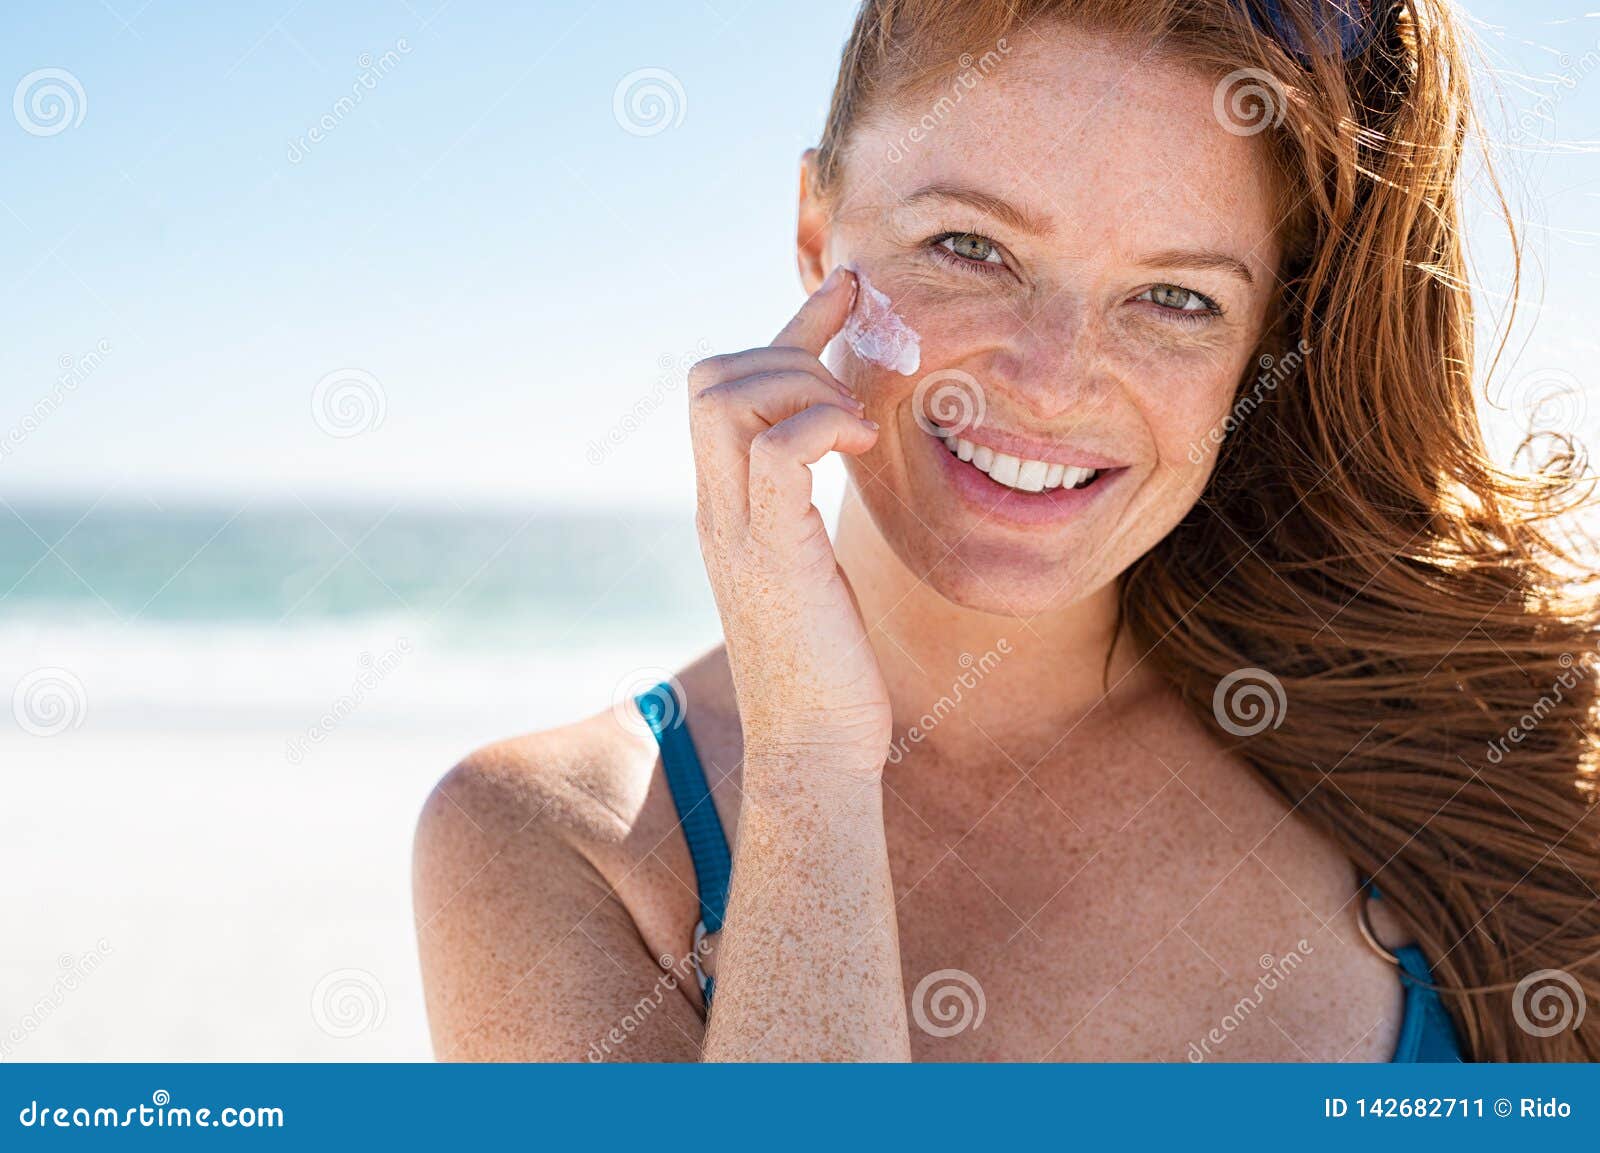 mature woman applying sunscreen on face